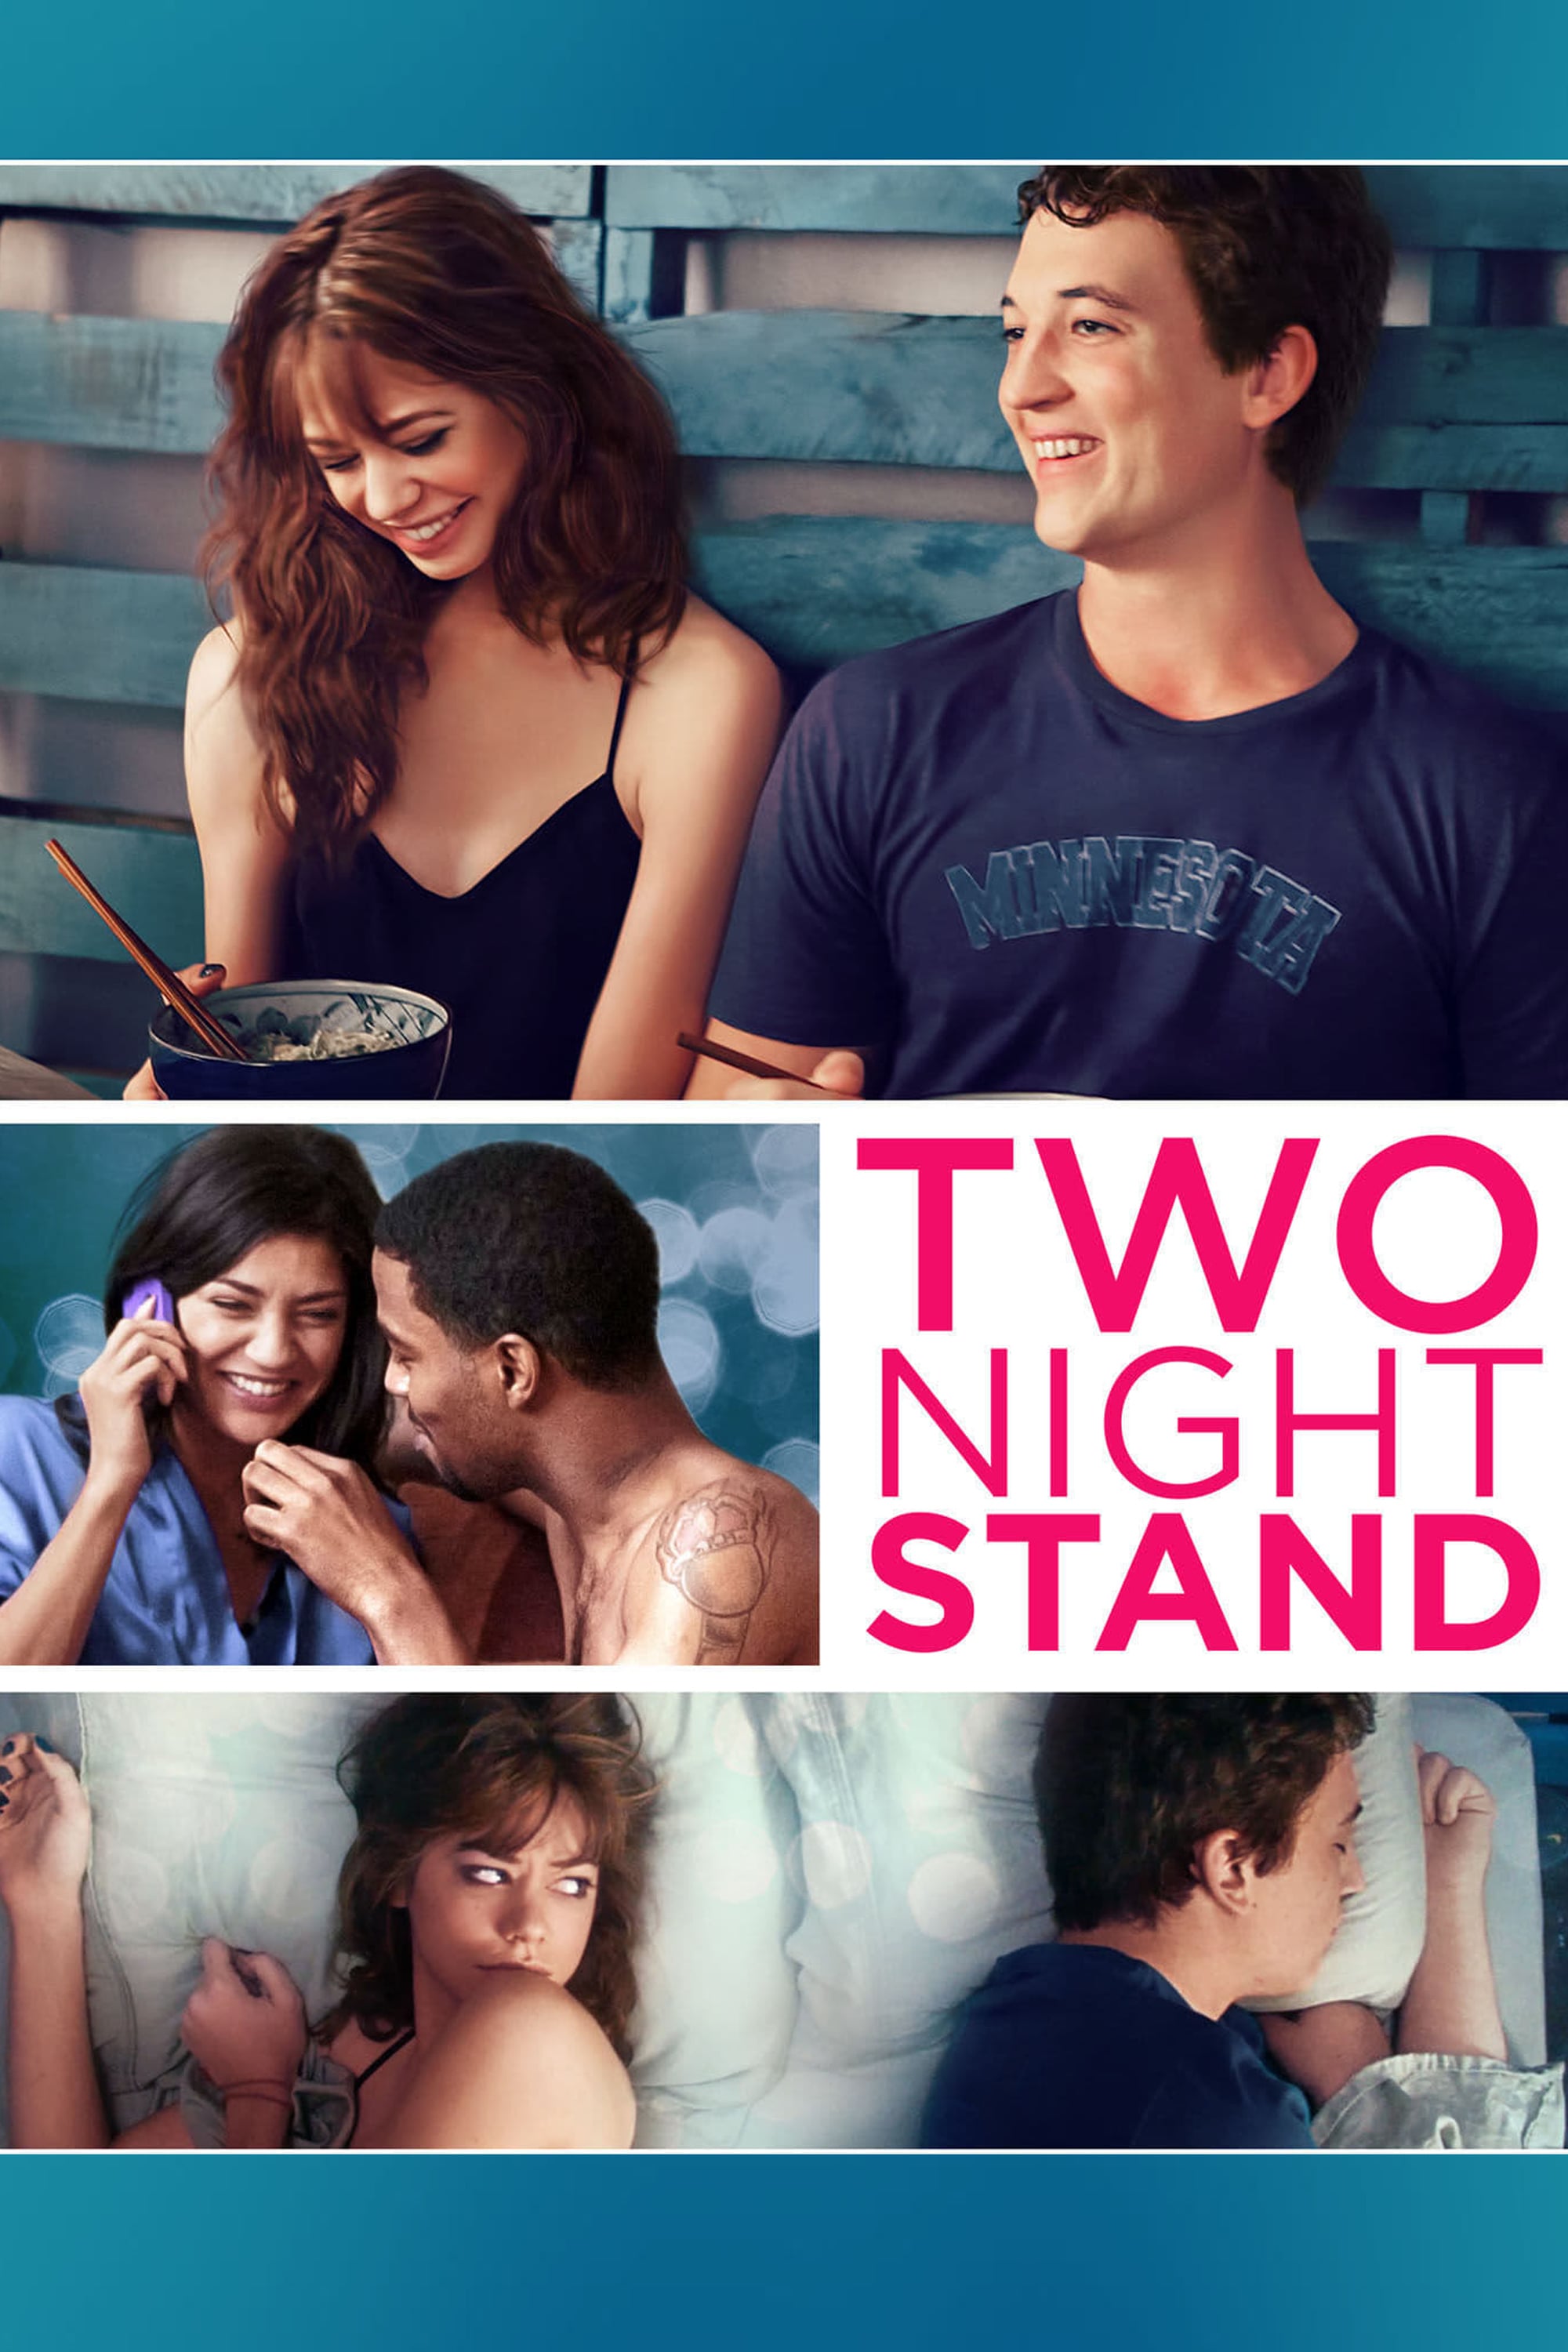 Two Night Stand, Movie fanart